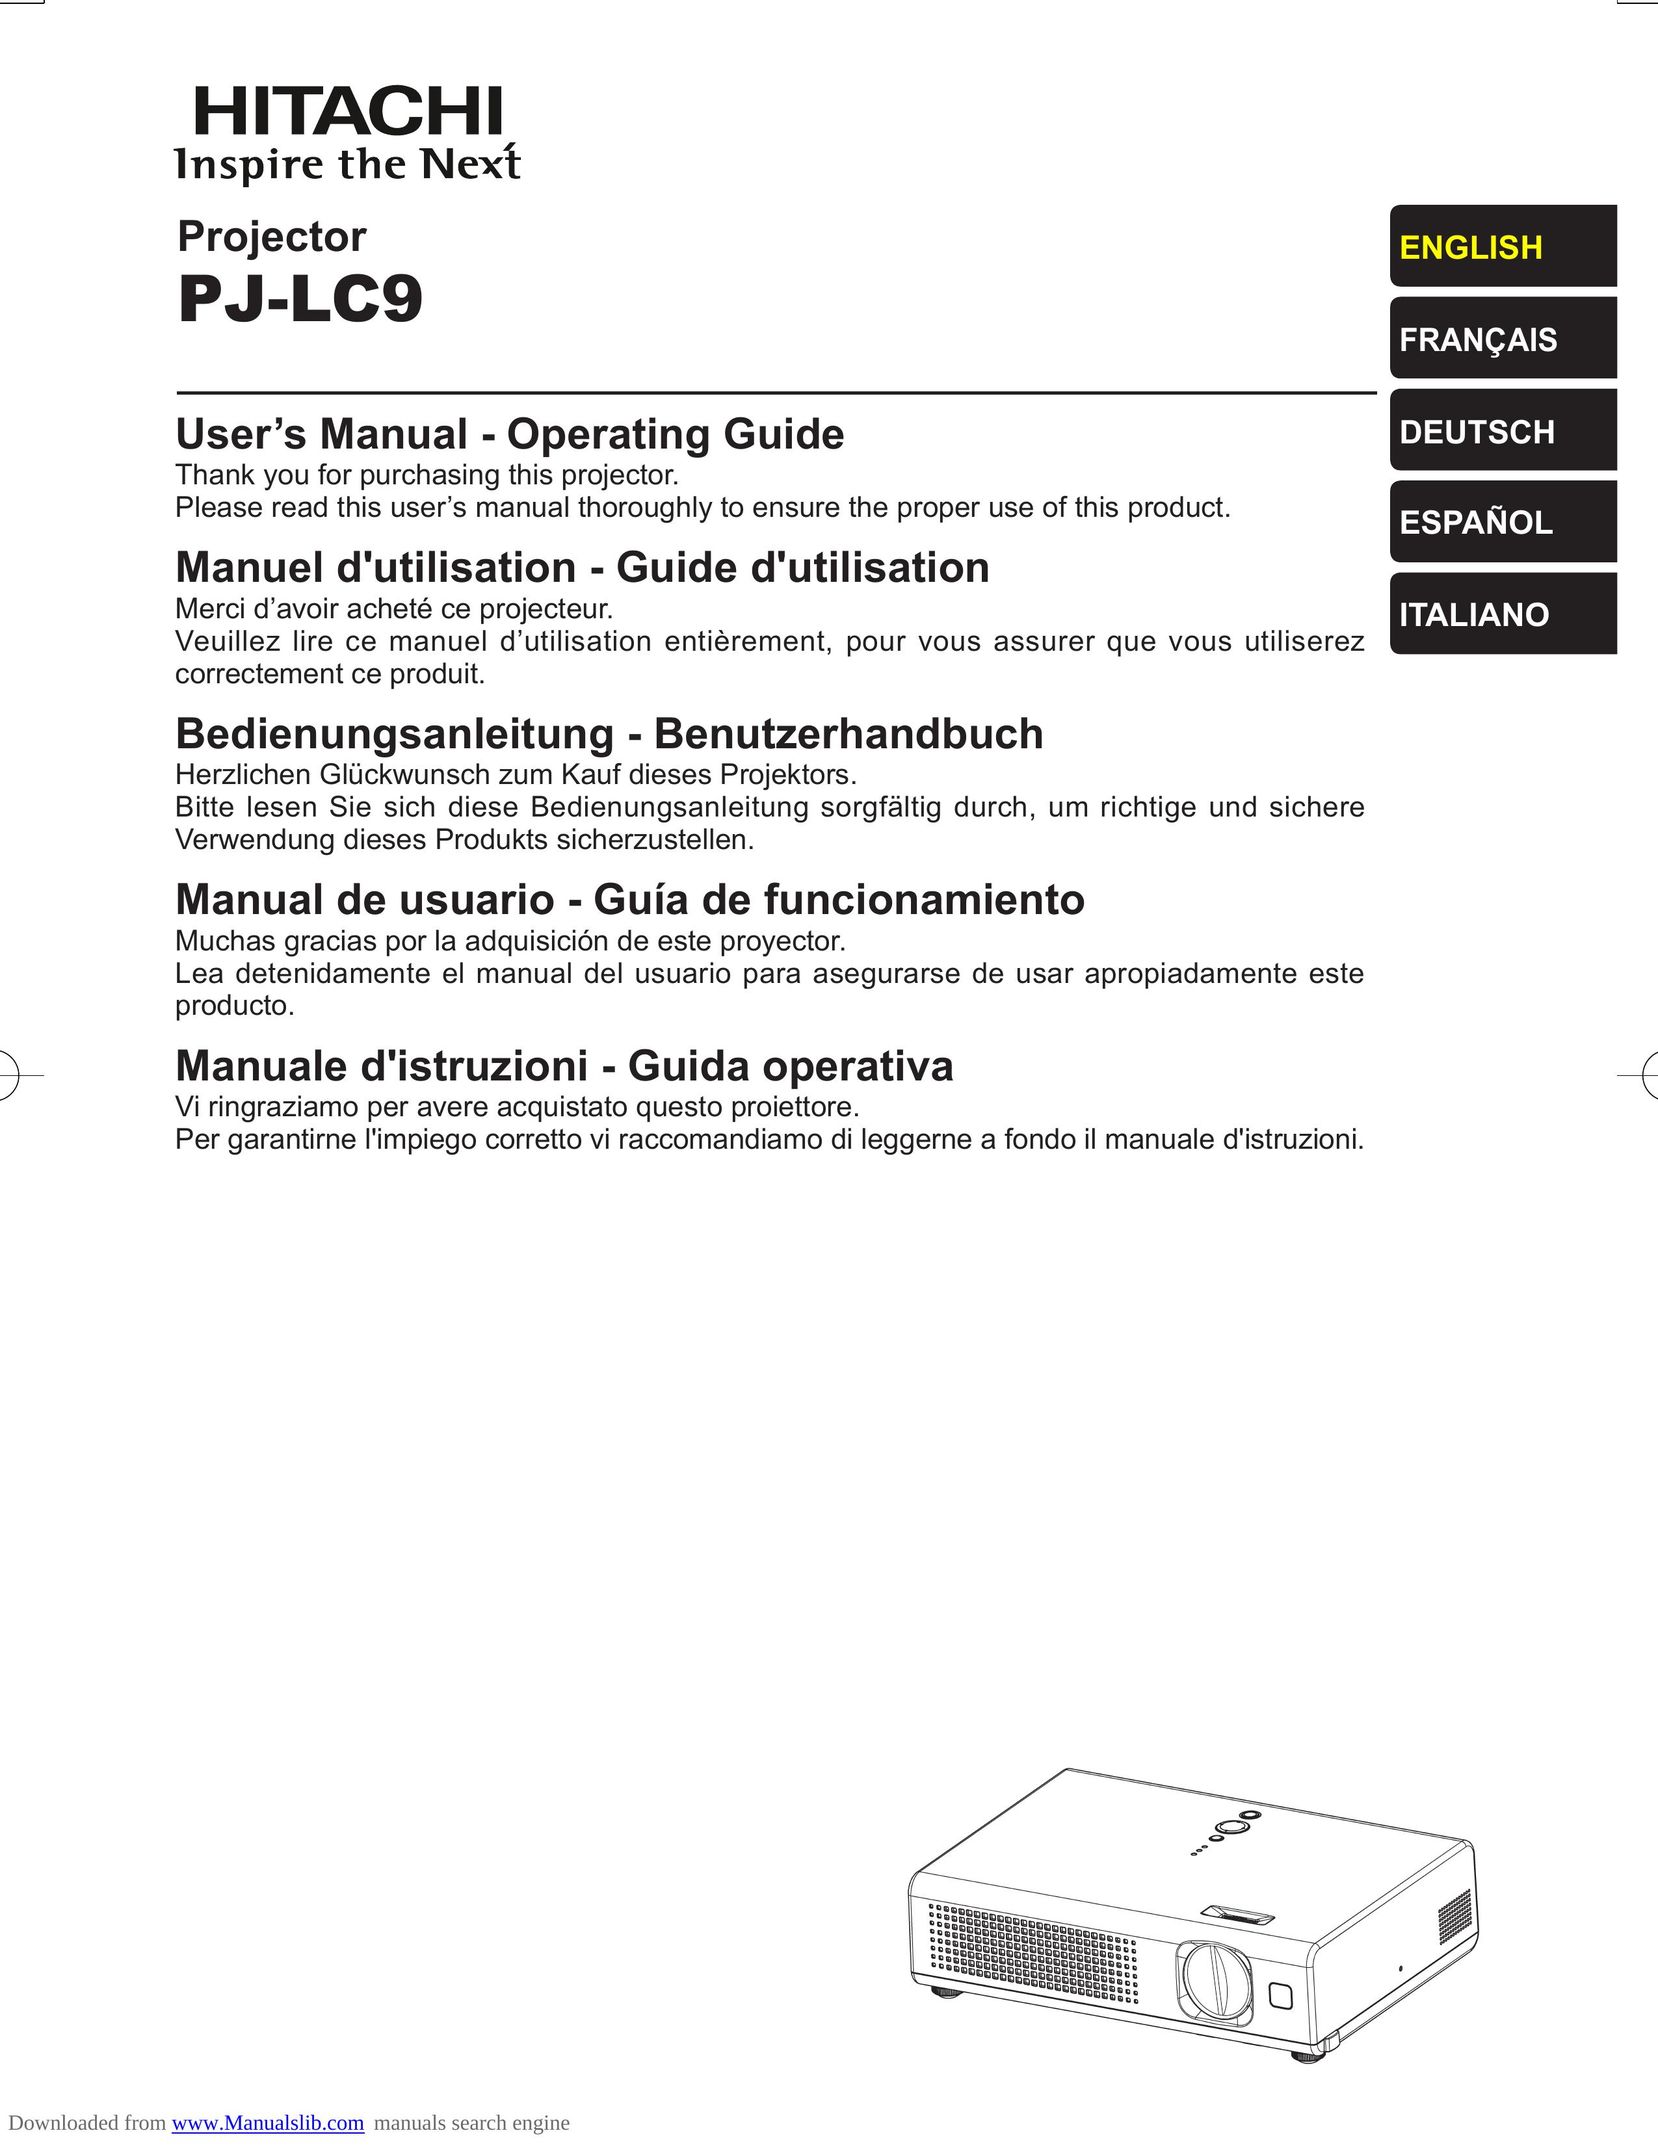 Hitachi PJ-LC9 Home Theater System User Manual